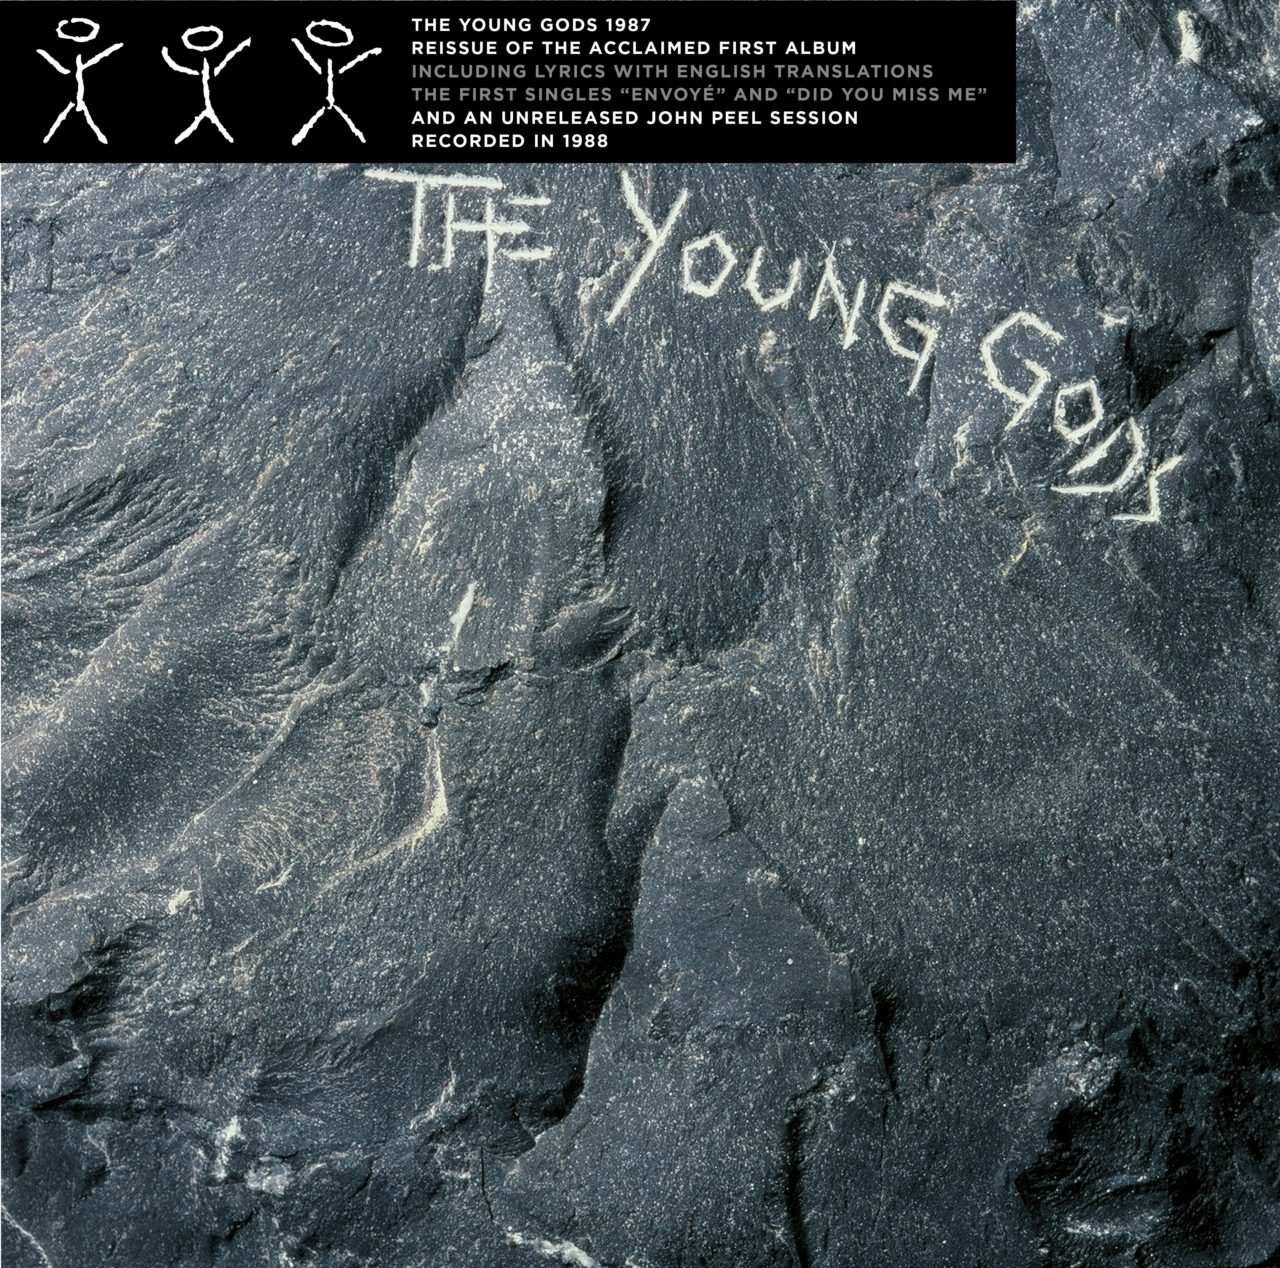 THE YOUNG GODS - Vinyl Reissue